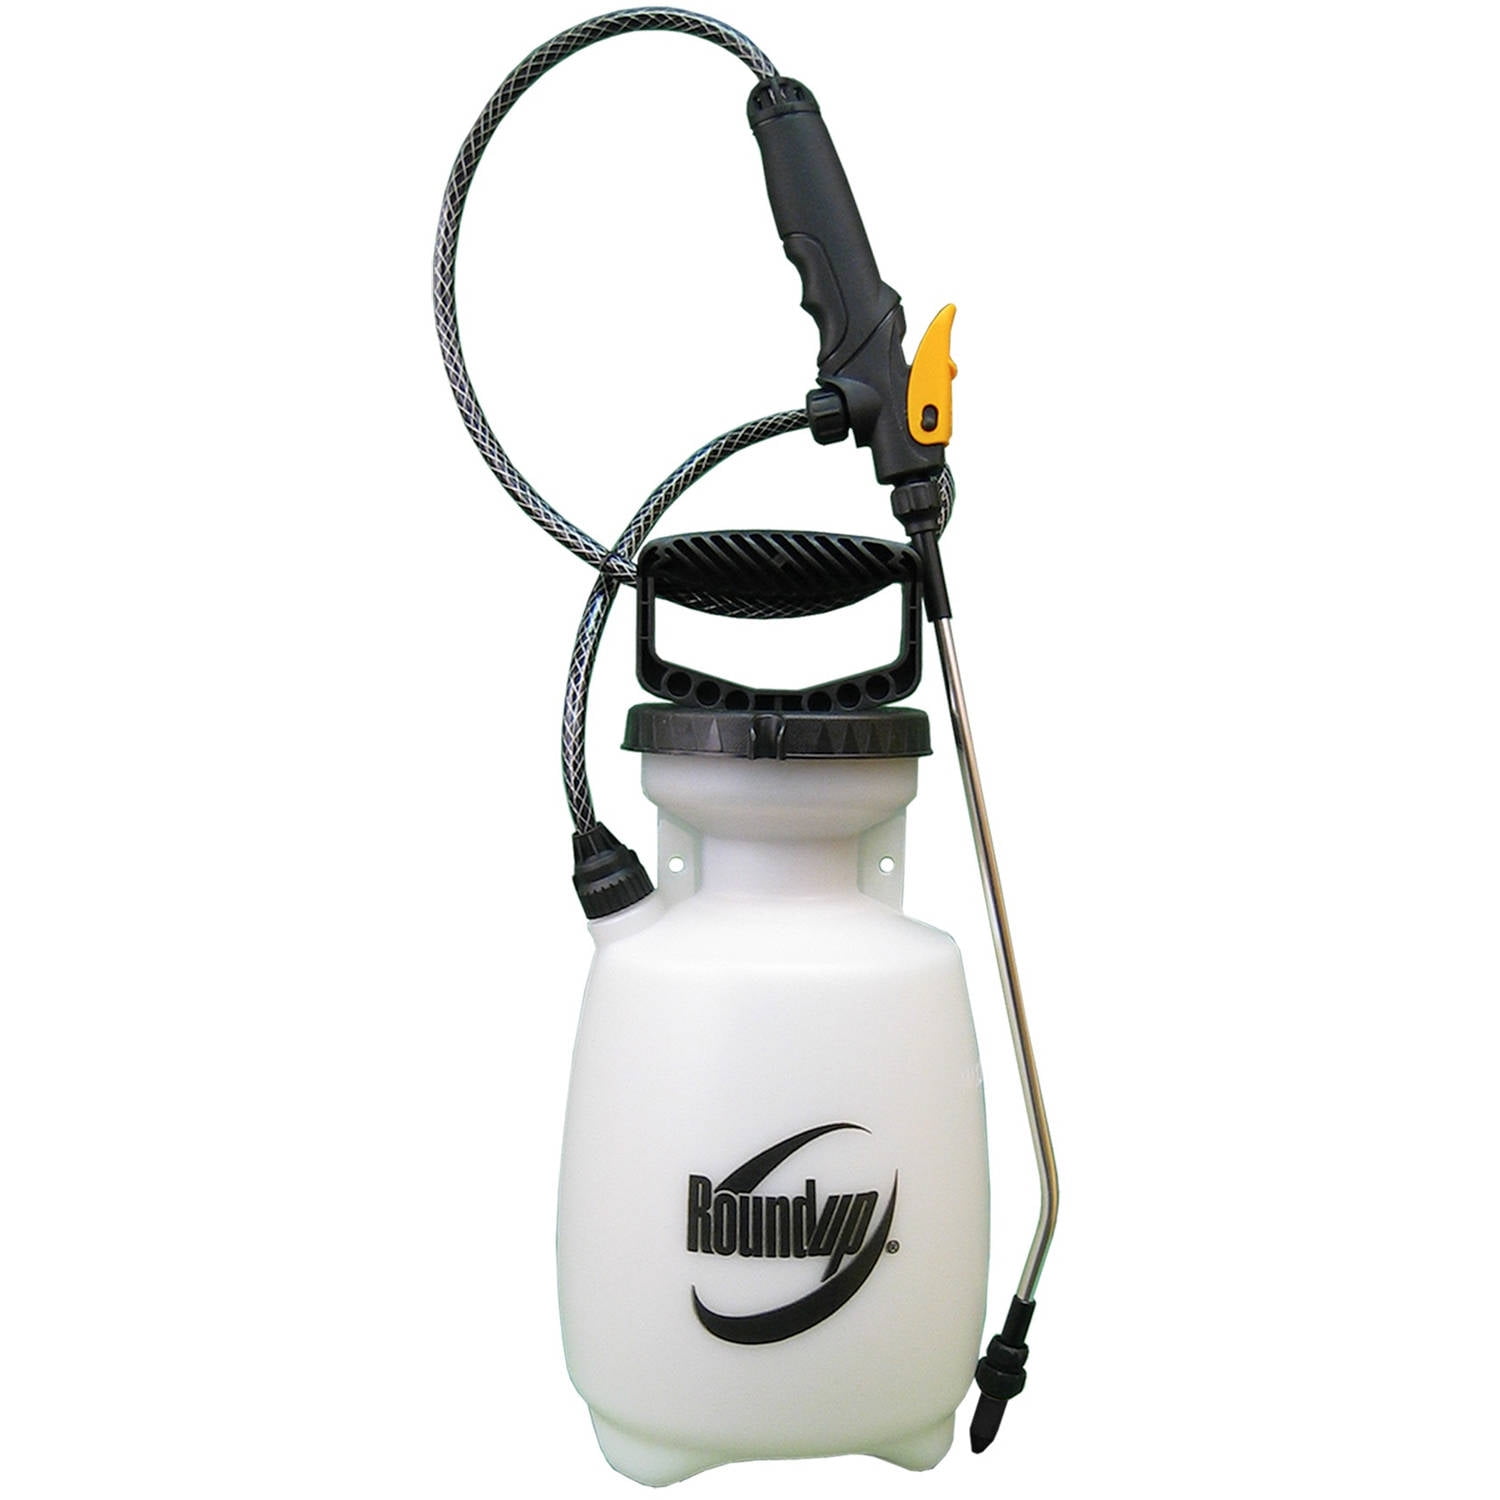 Roundup 1-Gallon Premium Sprayer - Walmart.com